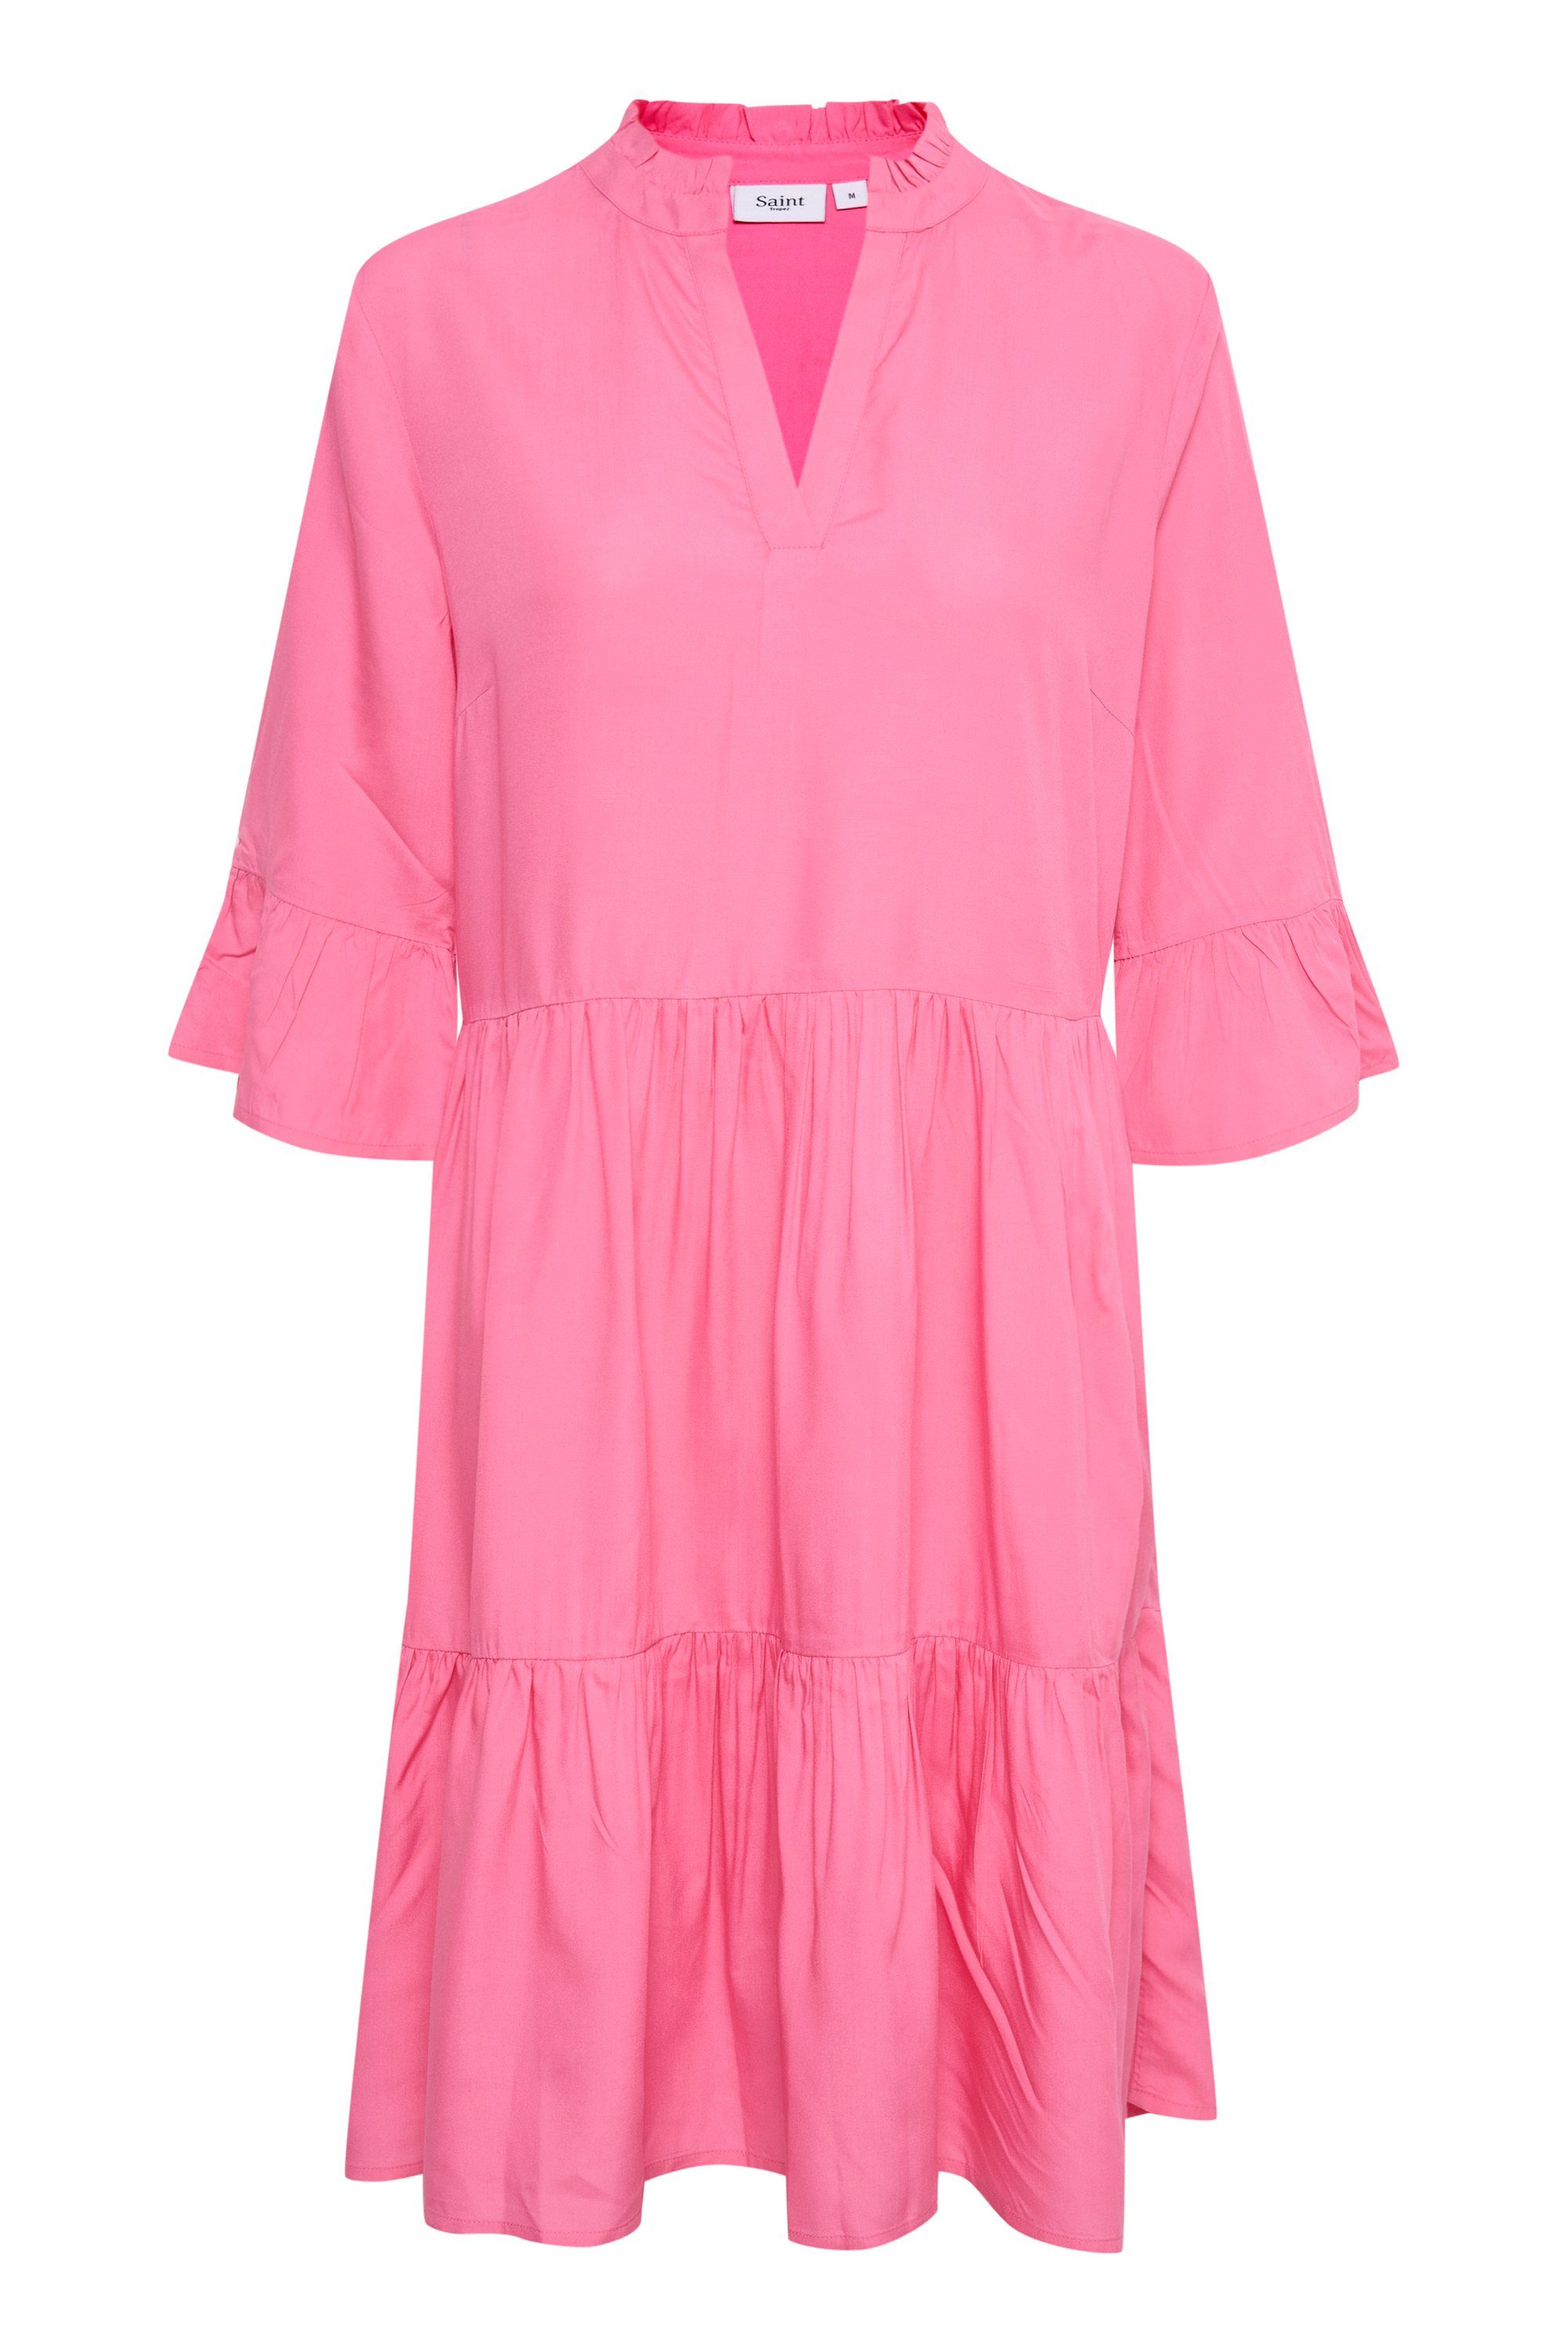 Jerseykleid Azalea Tropez Saint EdaSZ Pink Kleid